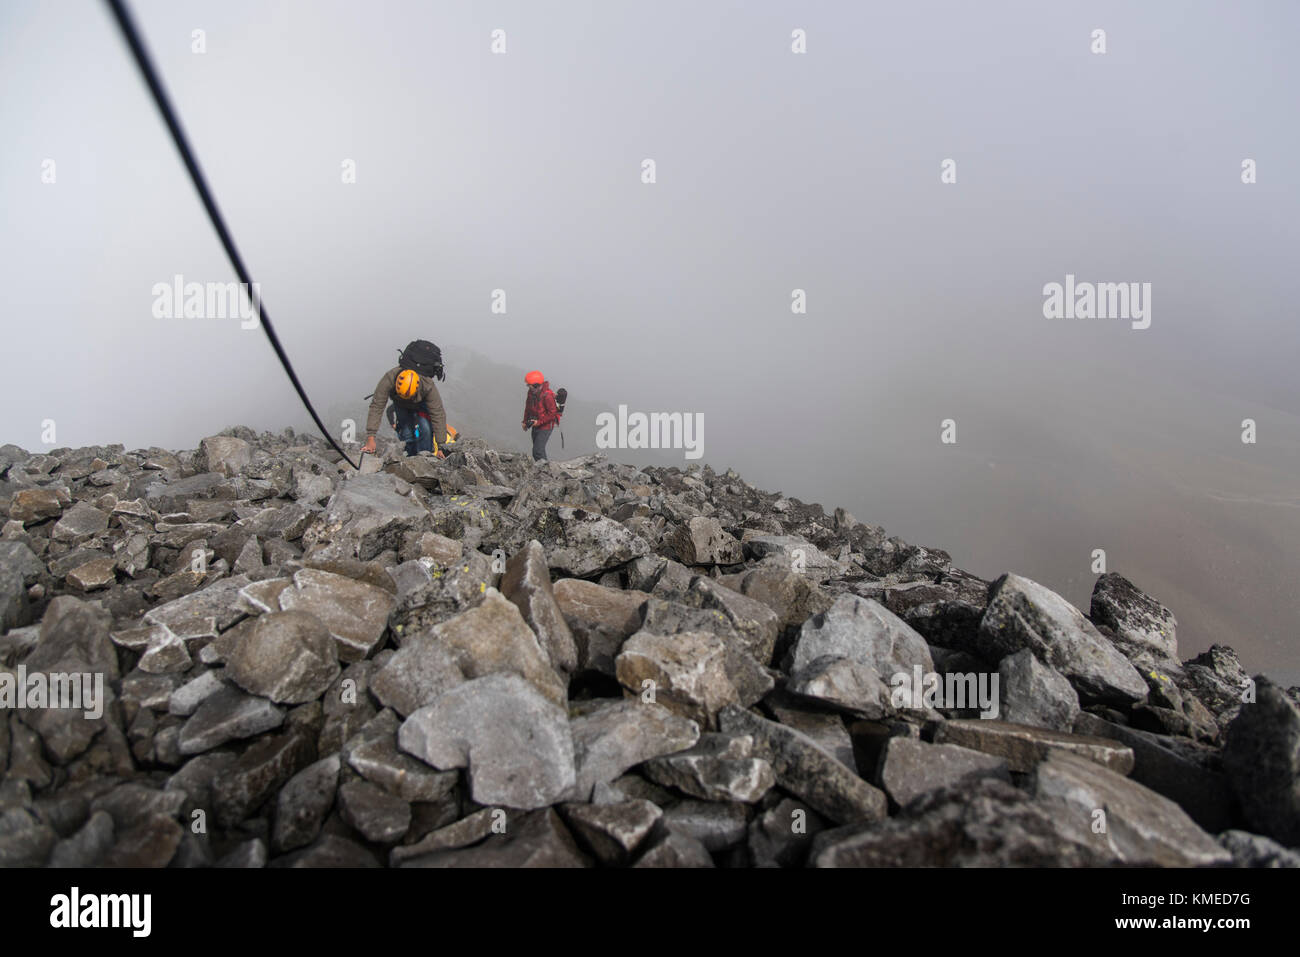 A group of climbers holding a rope on a rocky section while hikking up at the Nevado de Toluca volcano in Estado de Mexico, Mexico. Stock Photo